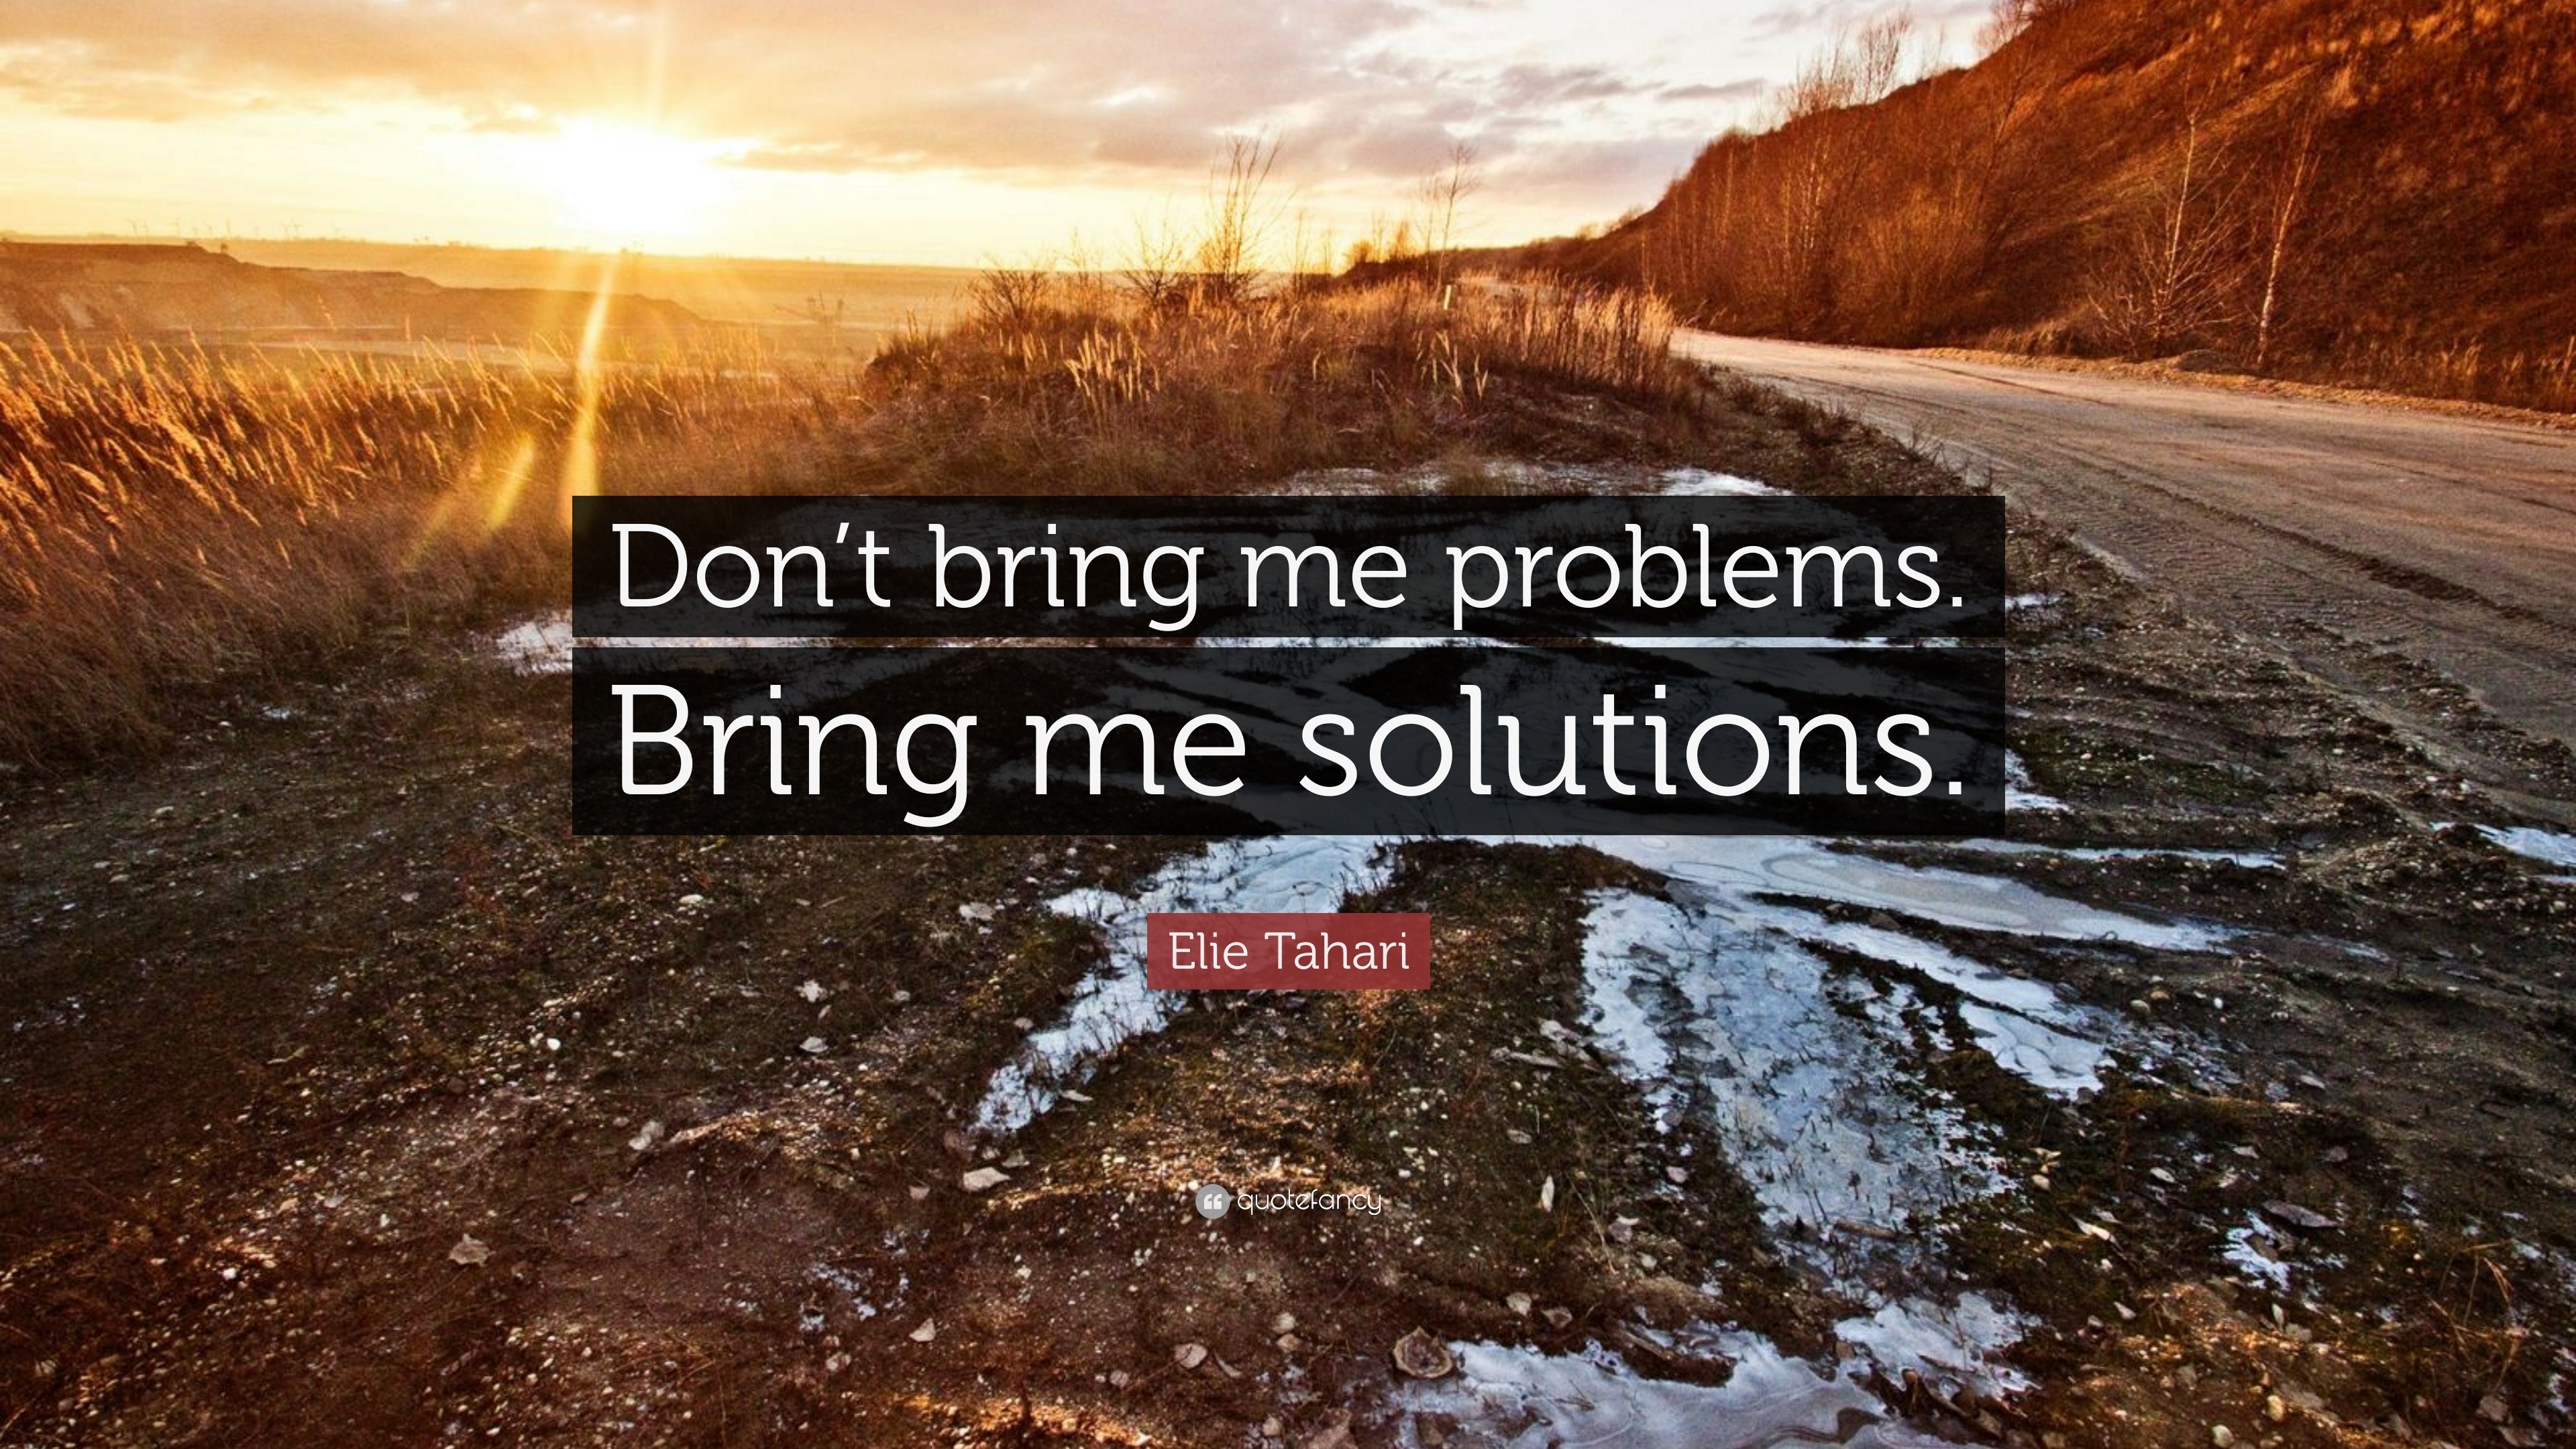 Elie Tahari Quote: "Don't bring me problems. Bring me ...